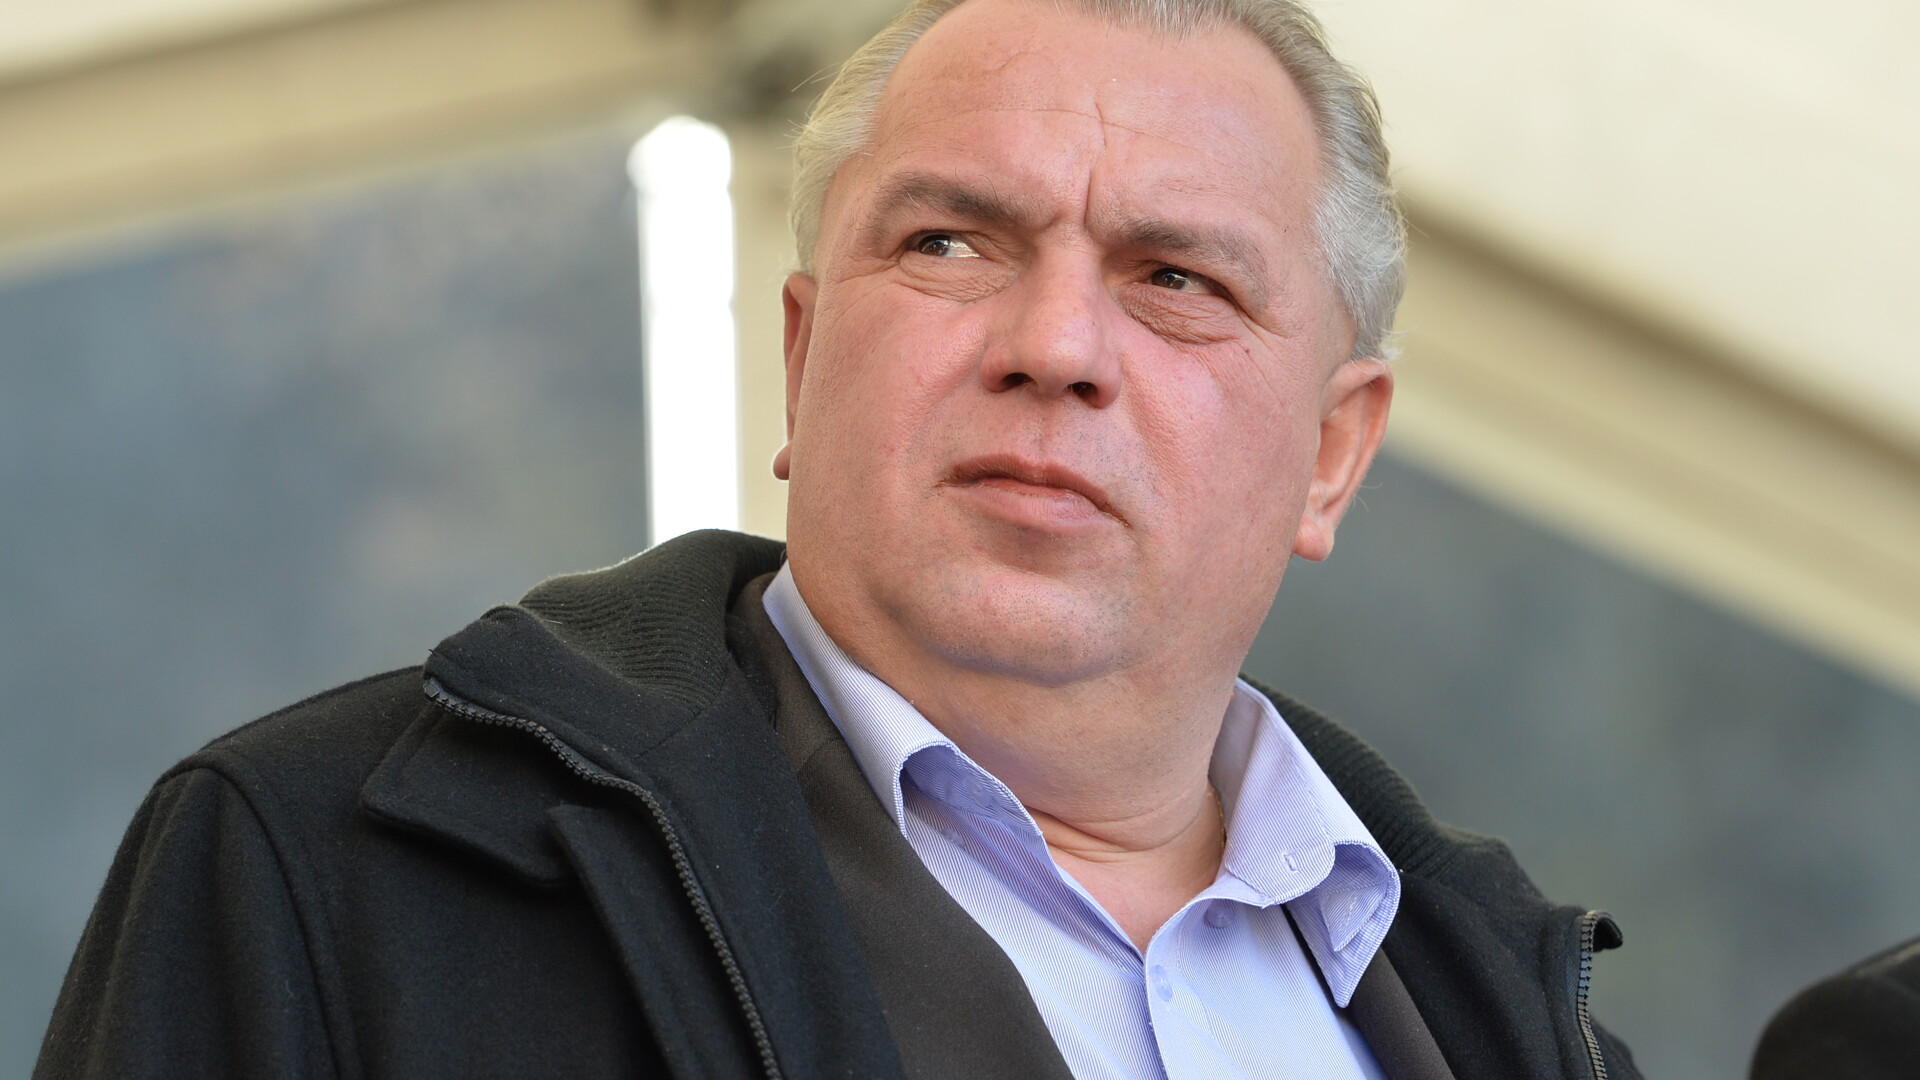 Nicusor Constantinescu